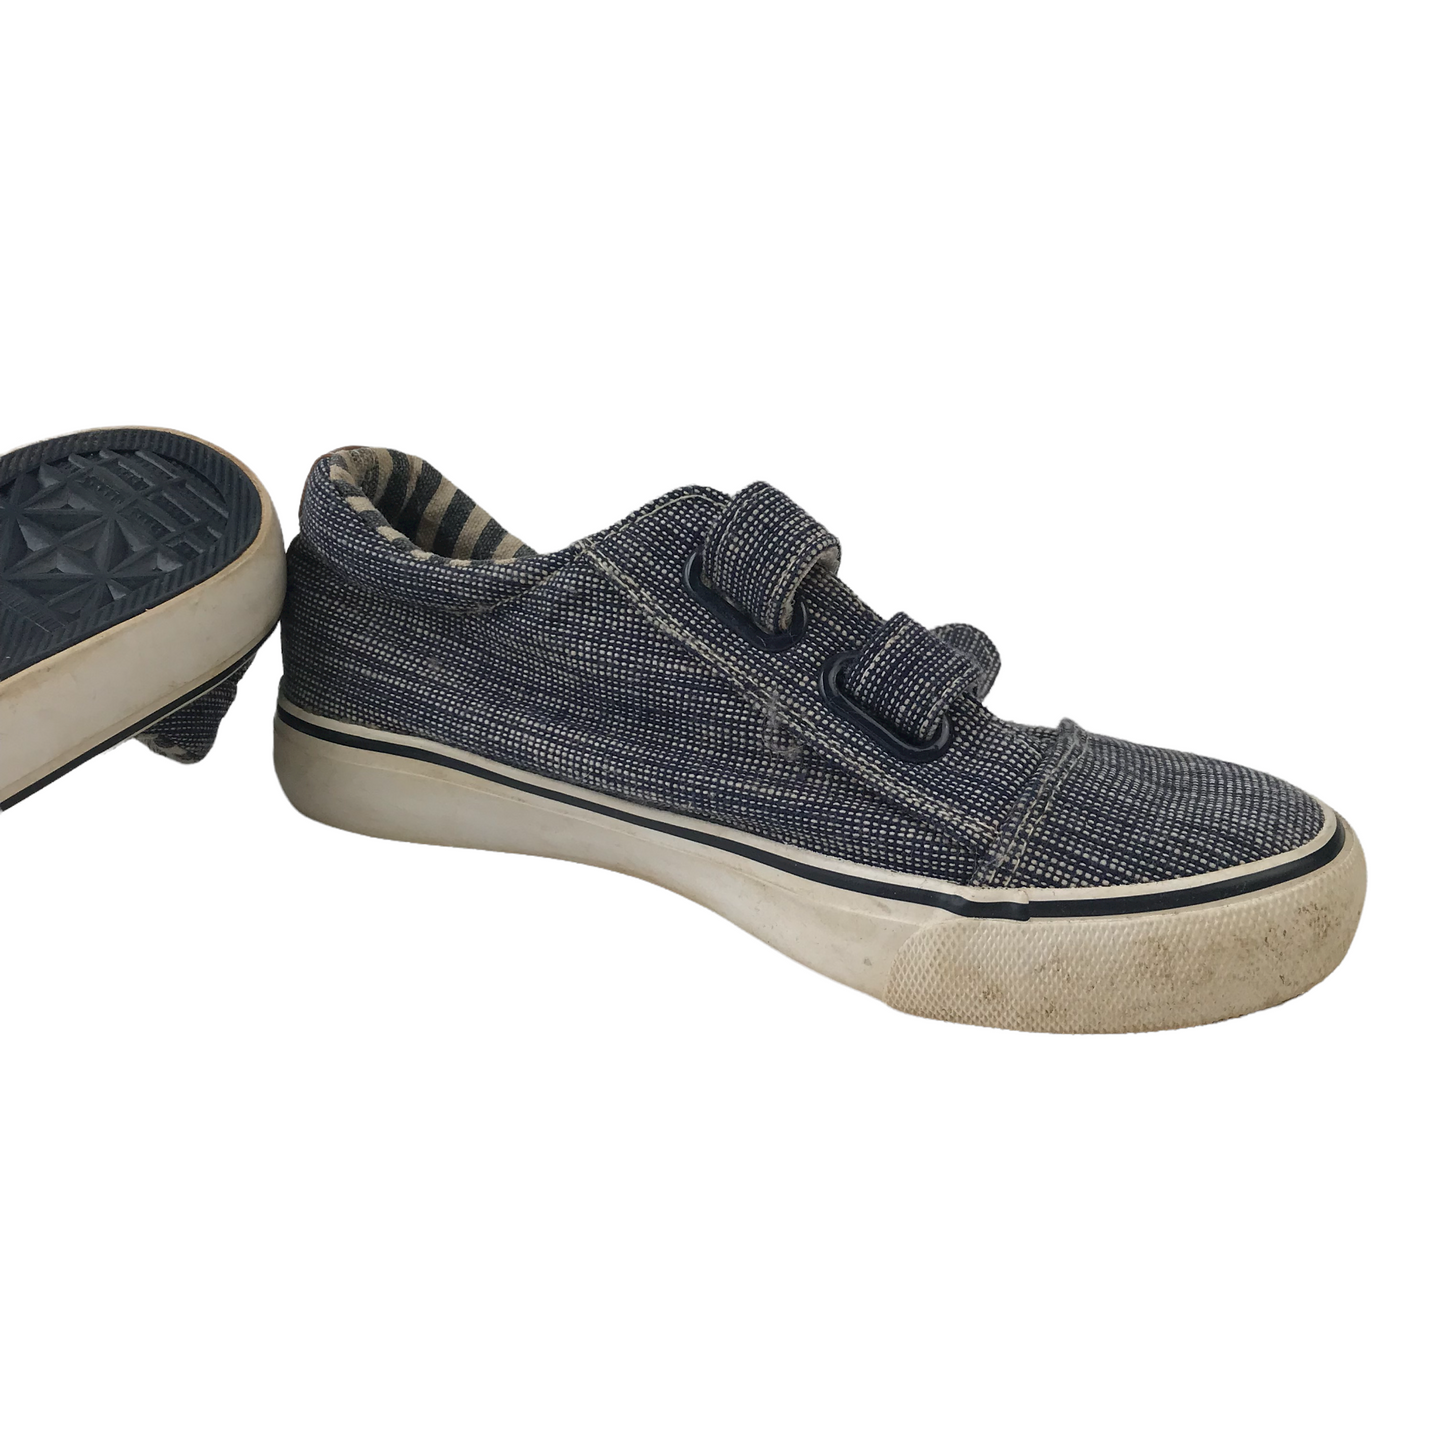 Nutmeg Navy Blue Trainers Shoe Size 13 (jr)